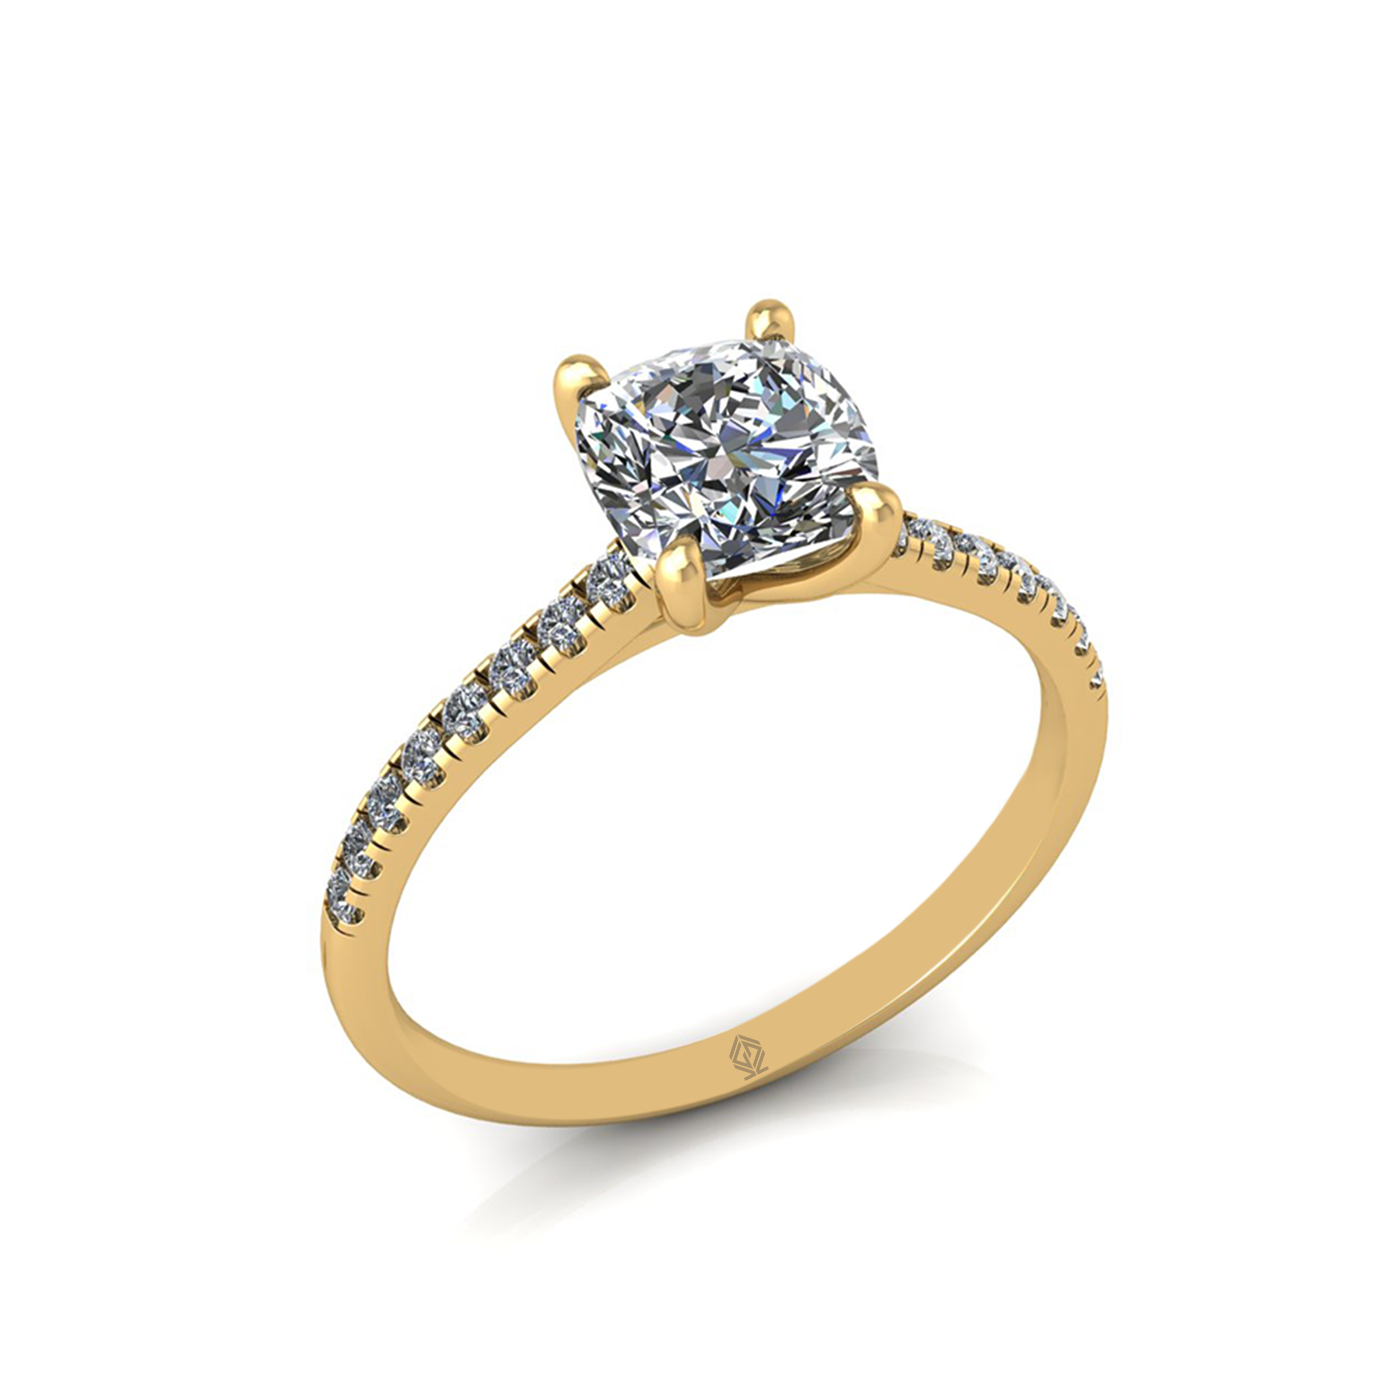 18k yellow gold 1.20ct 4 prongs cushion cut diamond engagement ring with whisper thin pavÉ set band